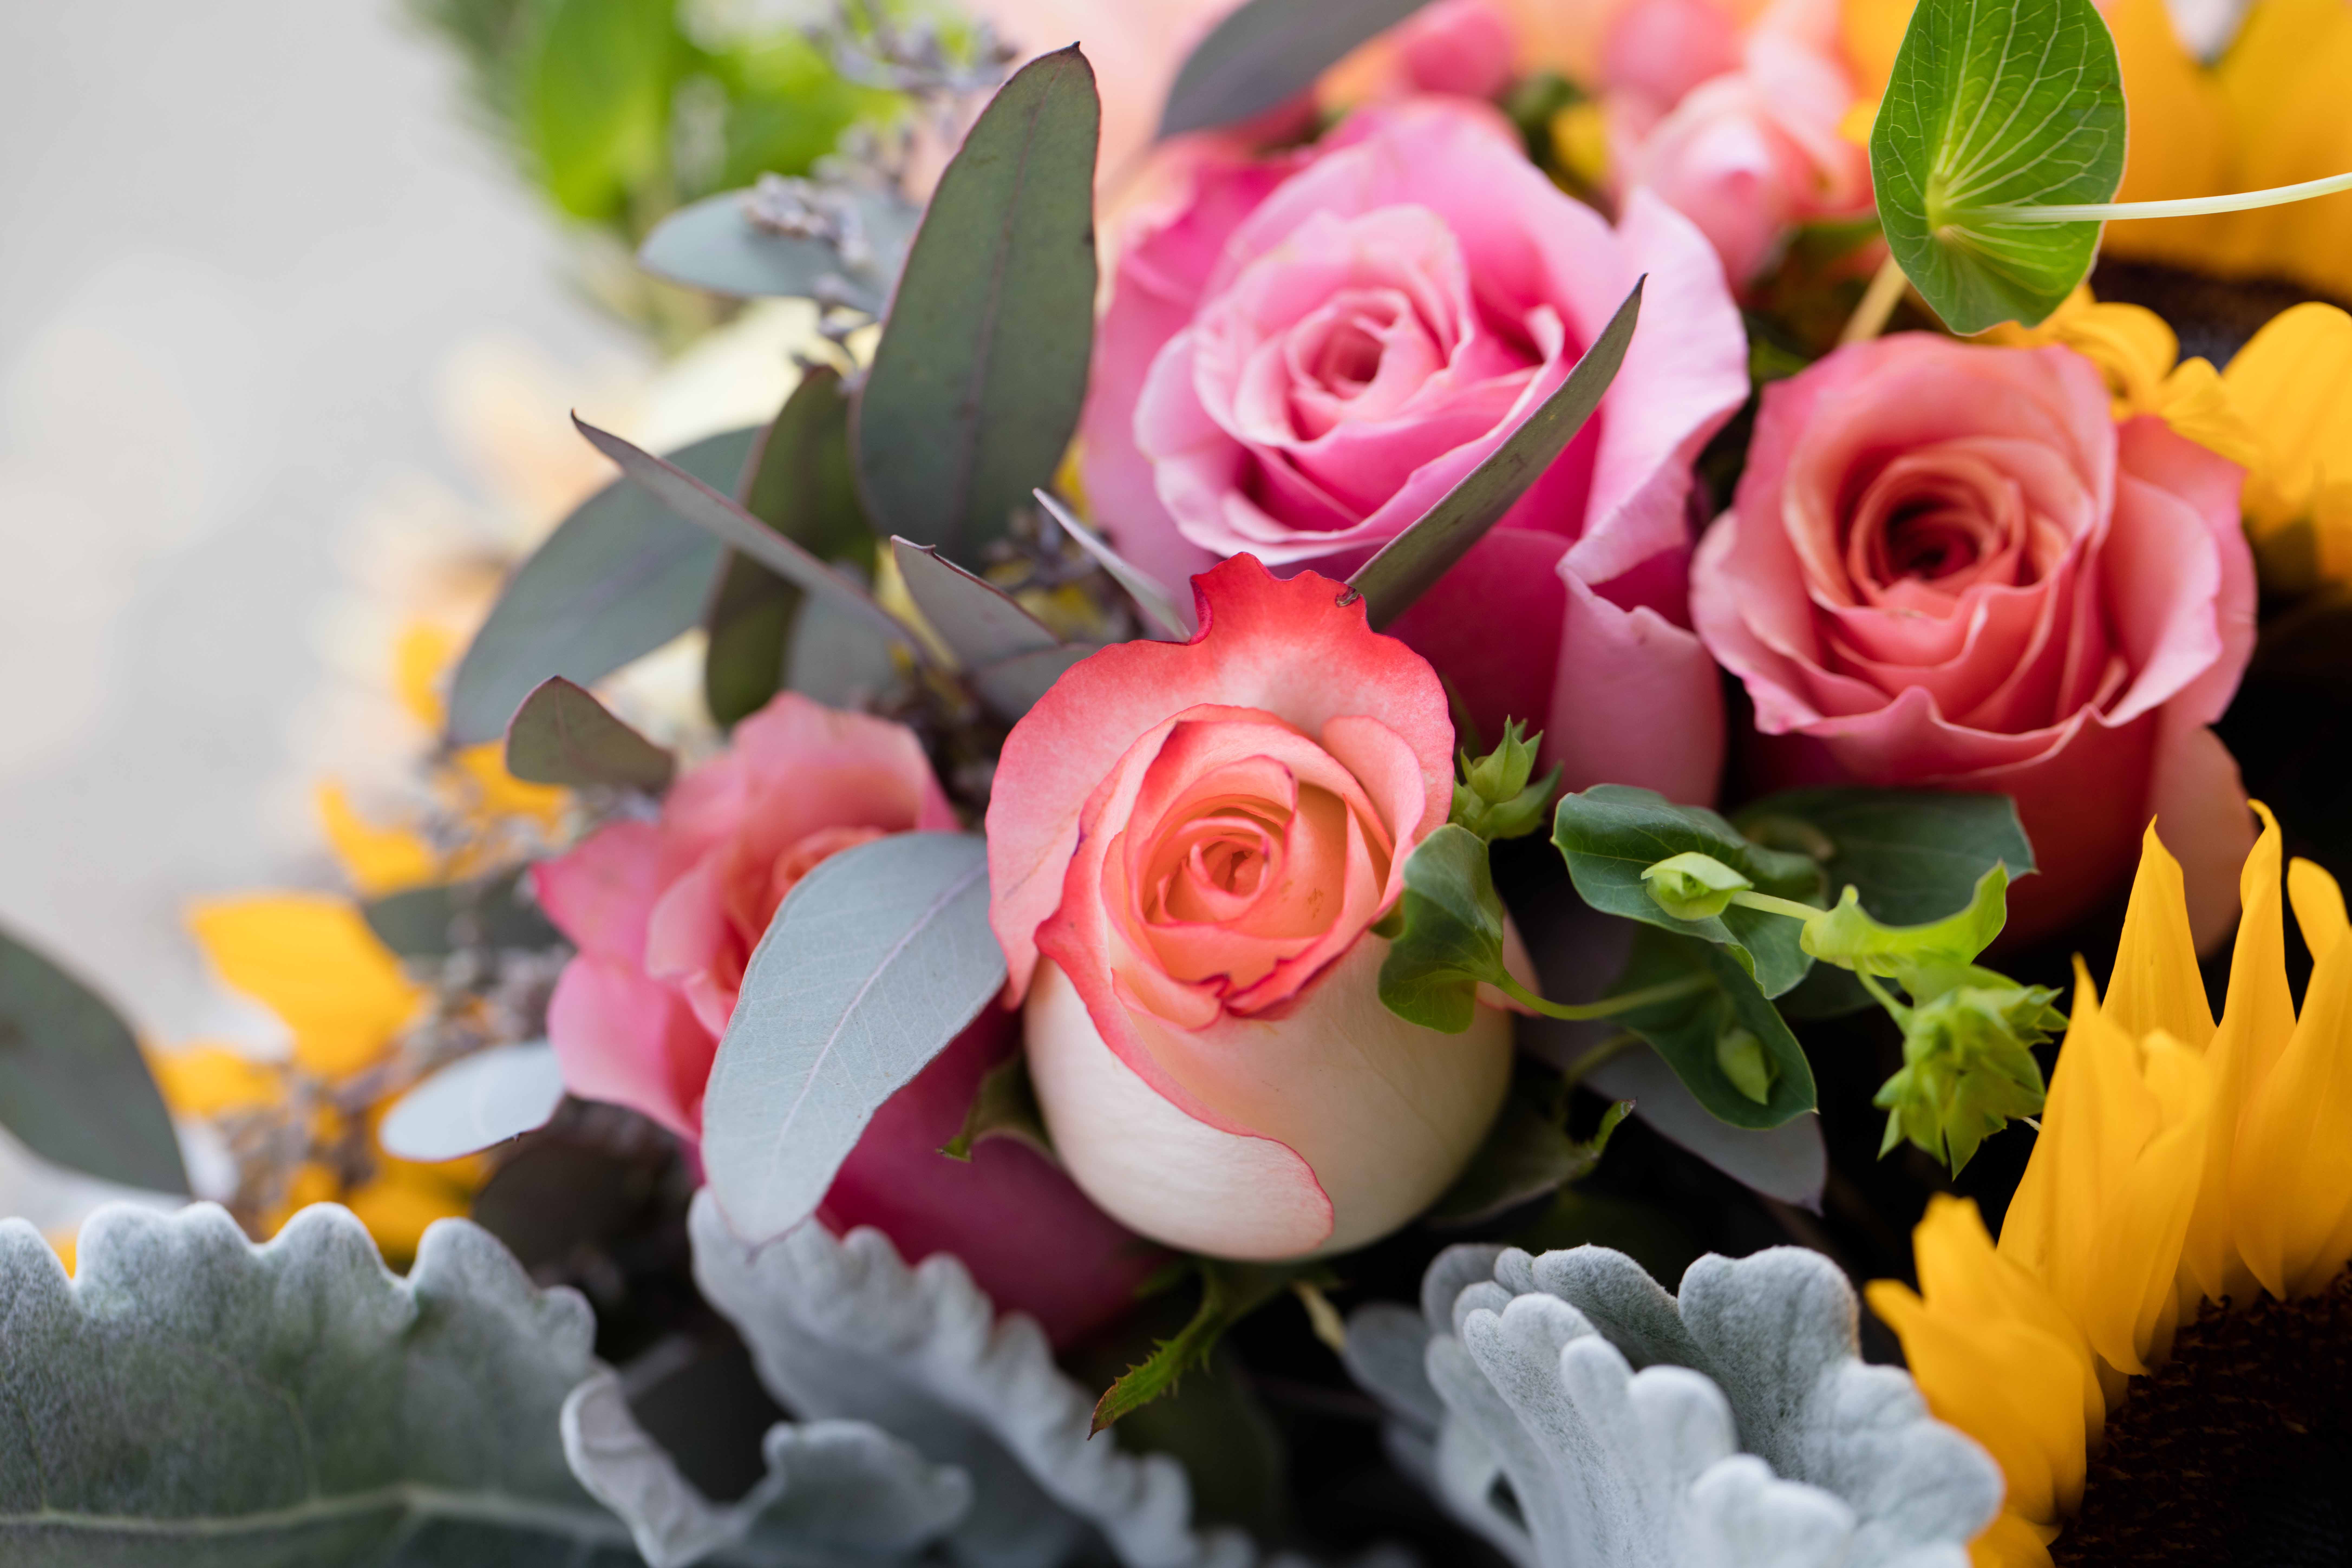 Designers Choice by Barb's Flowers - Let the florist create a beautiful arrangement of seasonal flowers